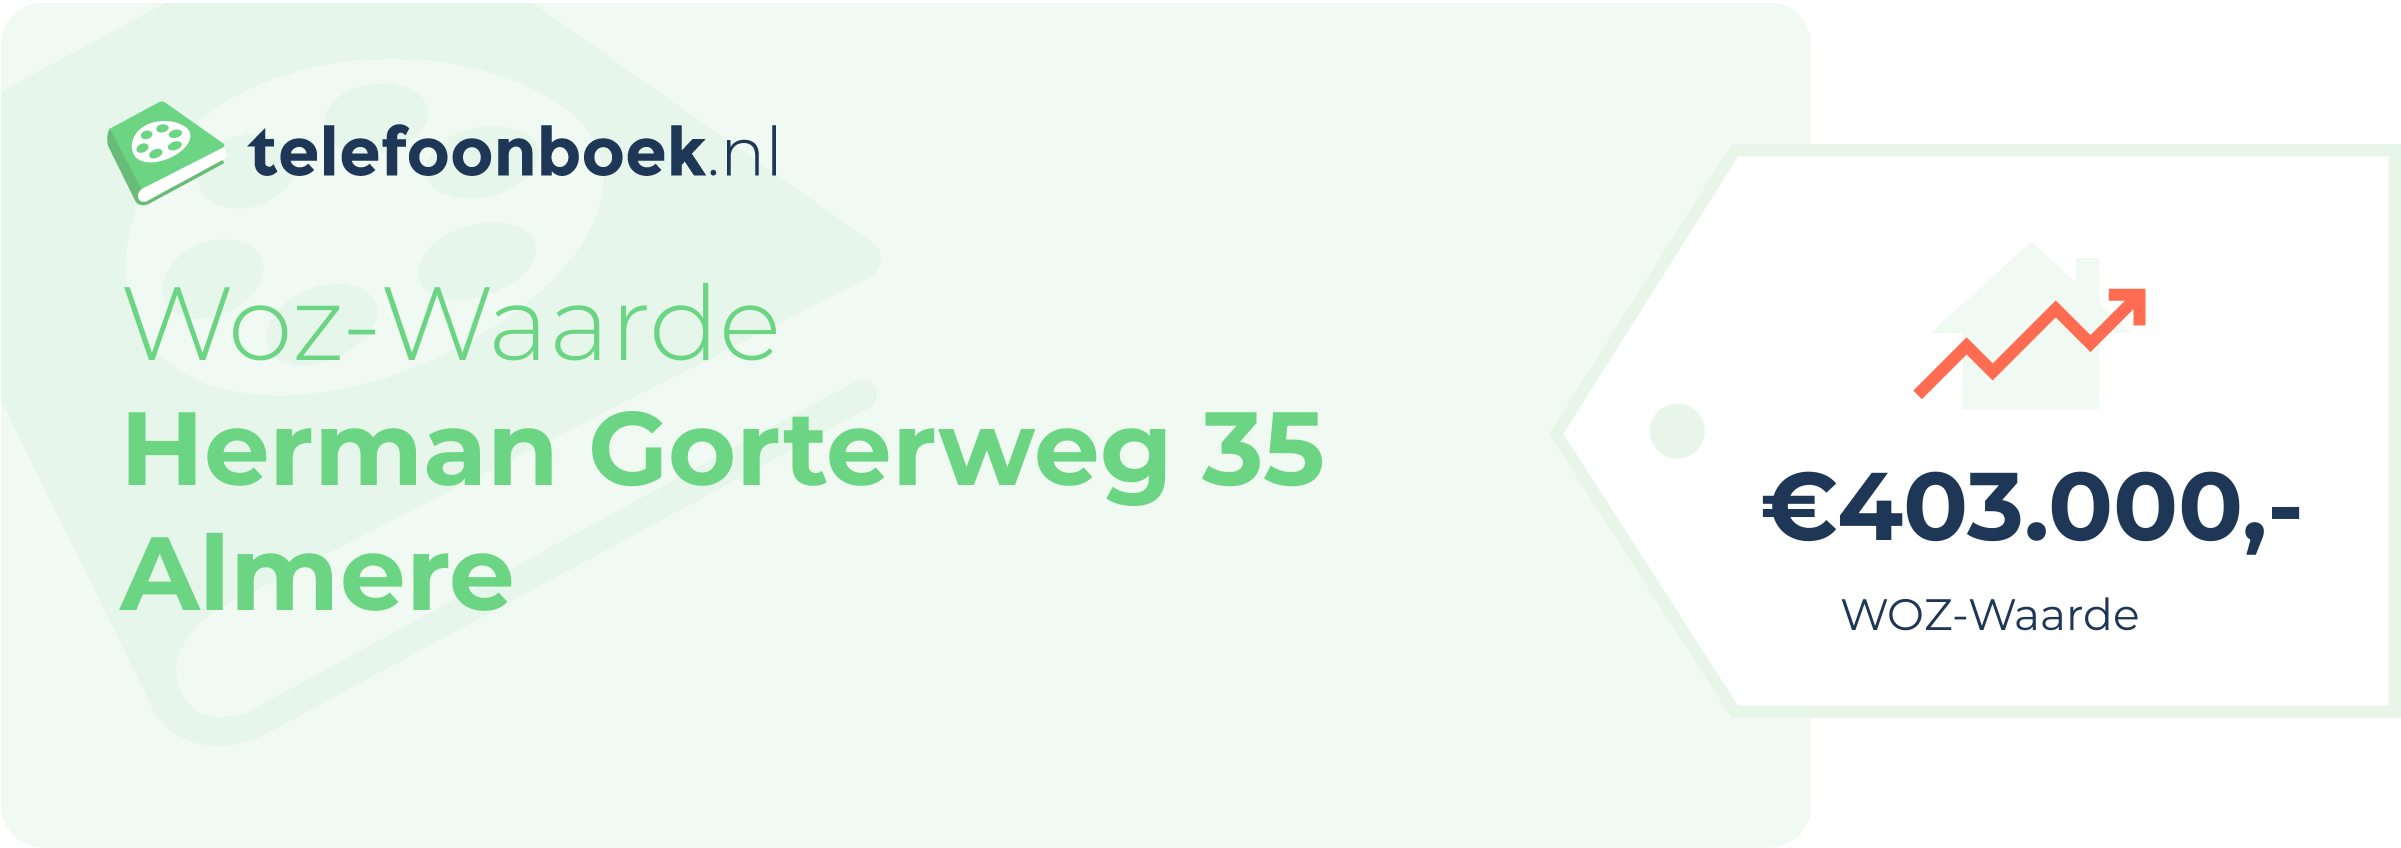 WOZ-waarde Herman Gorterweg 35 Almere